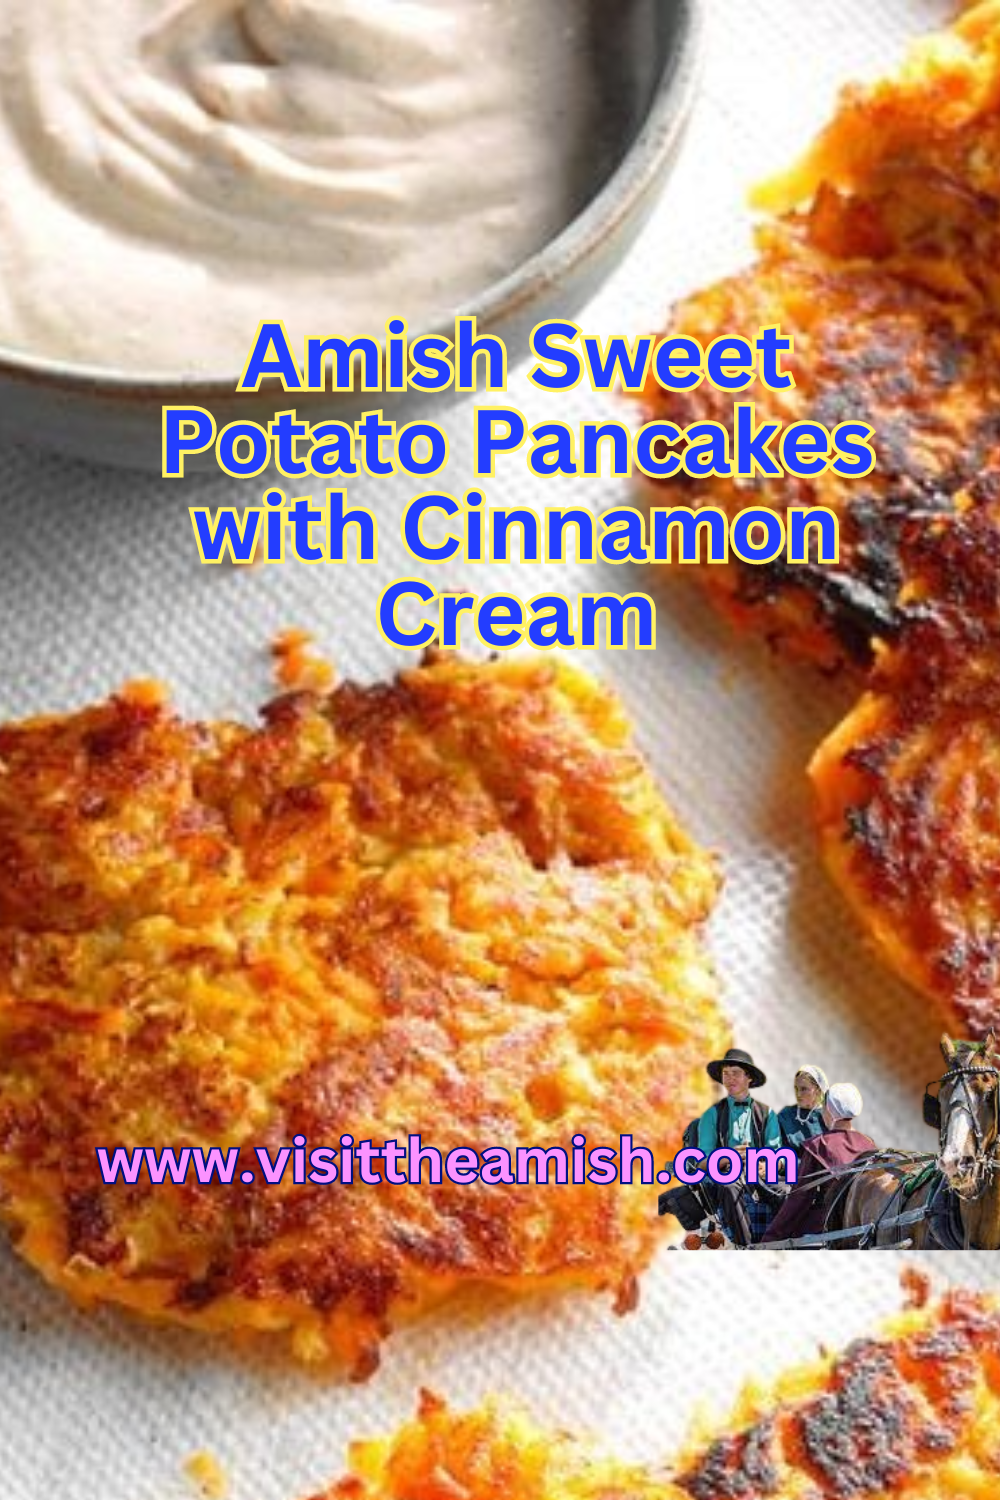 Amish-Sweet-Potato-Pancakes-with-Cinnamon-Cream